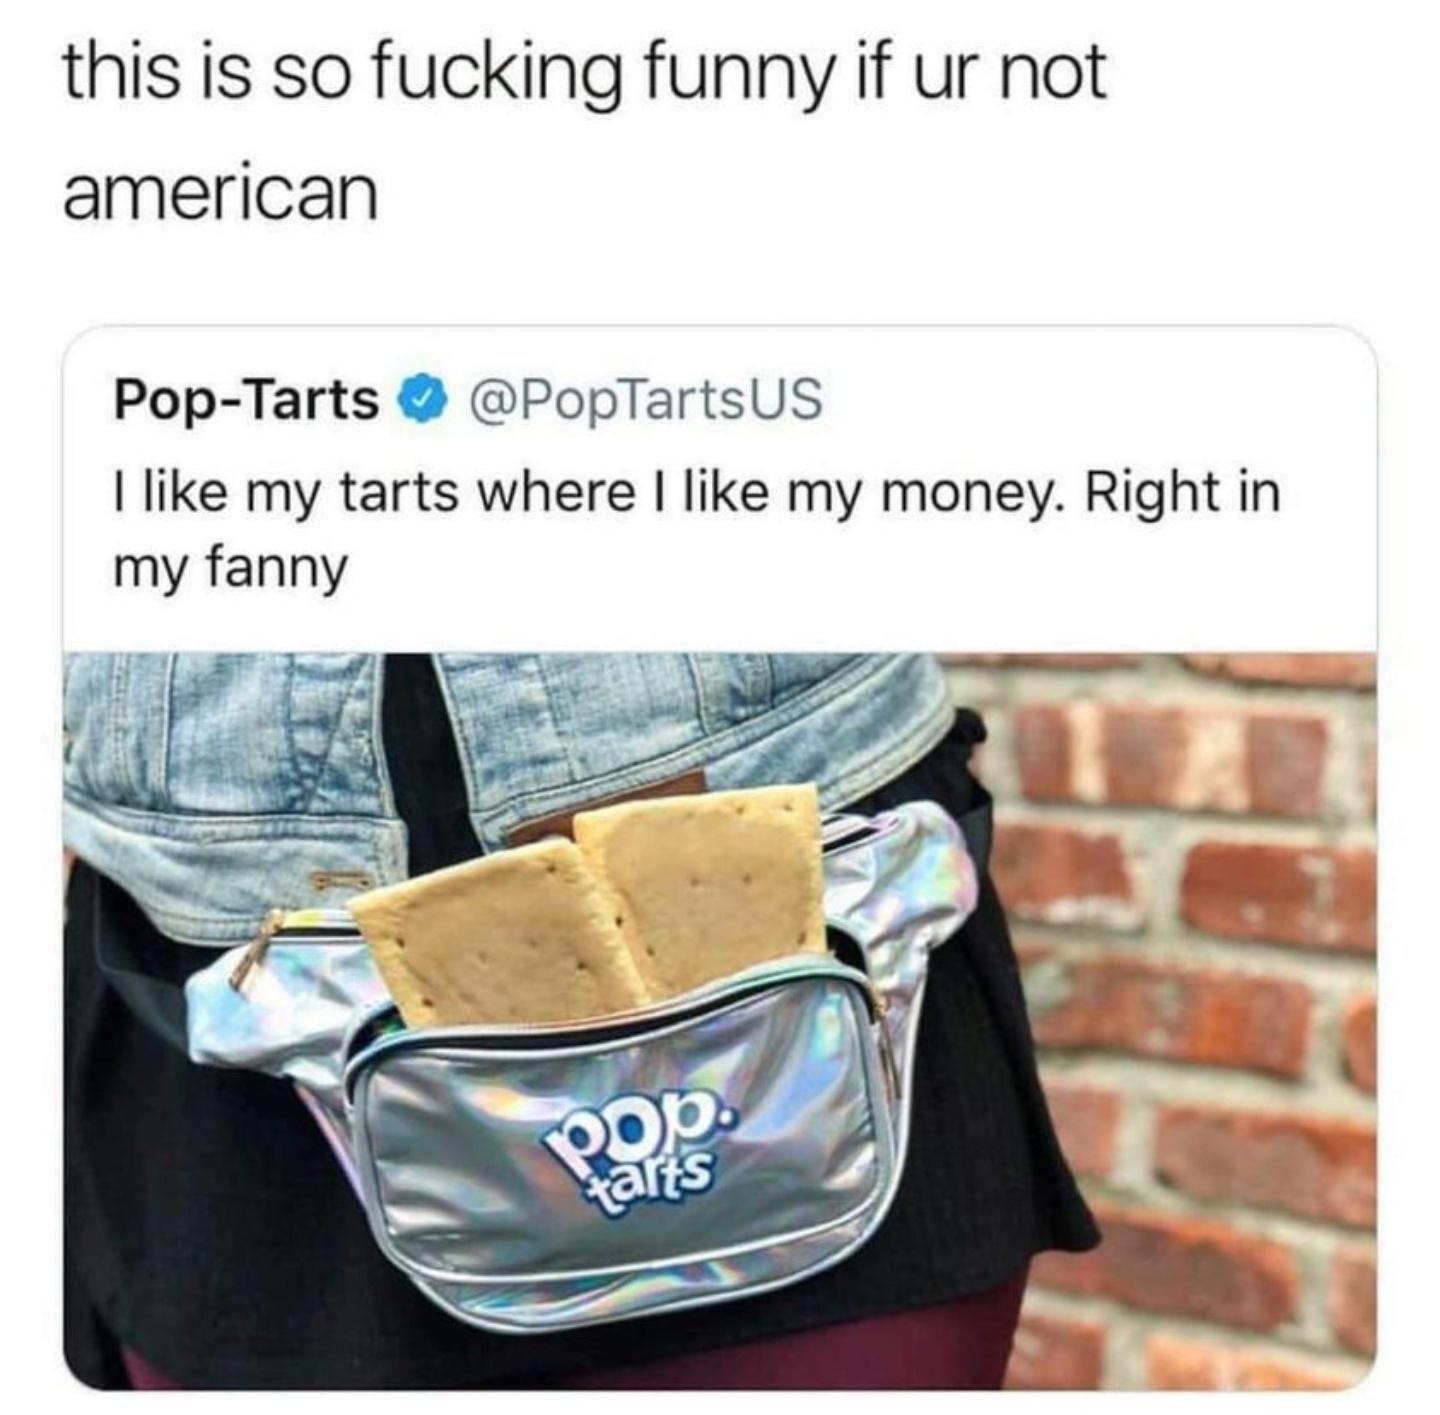 pop tarts fanny advert - this is so fucking funny if ur not american PopTarts I my tarts where I my money. Right in my fanny pop. taris